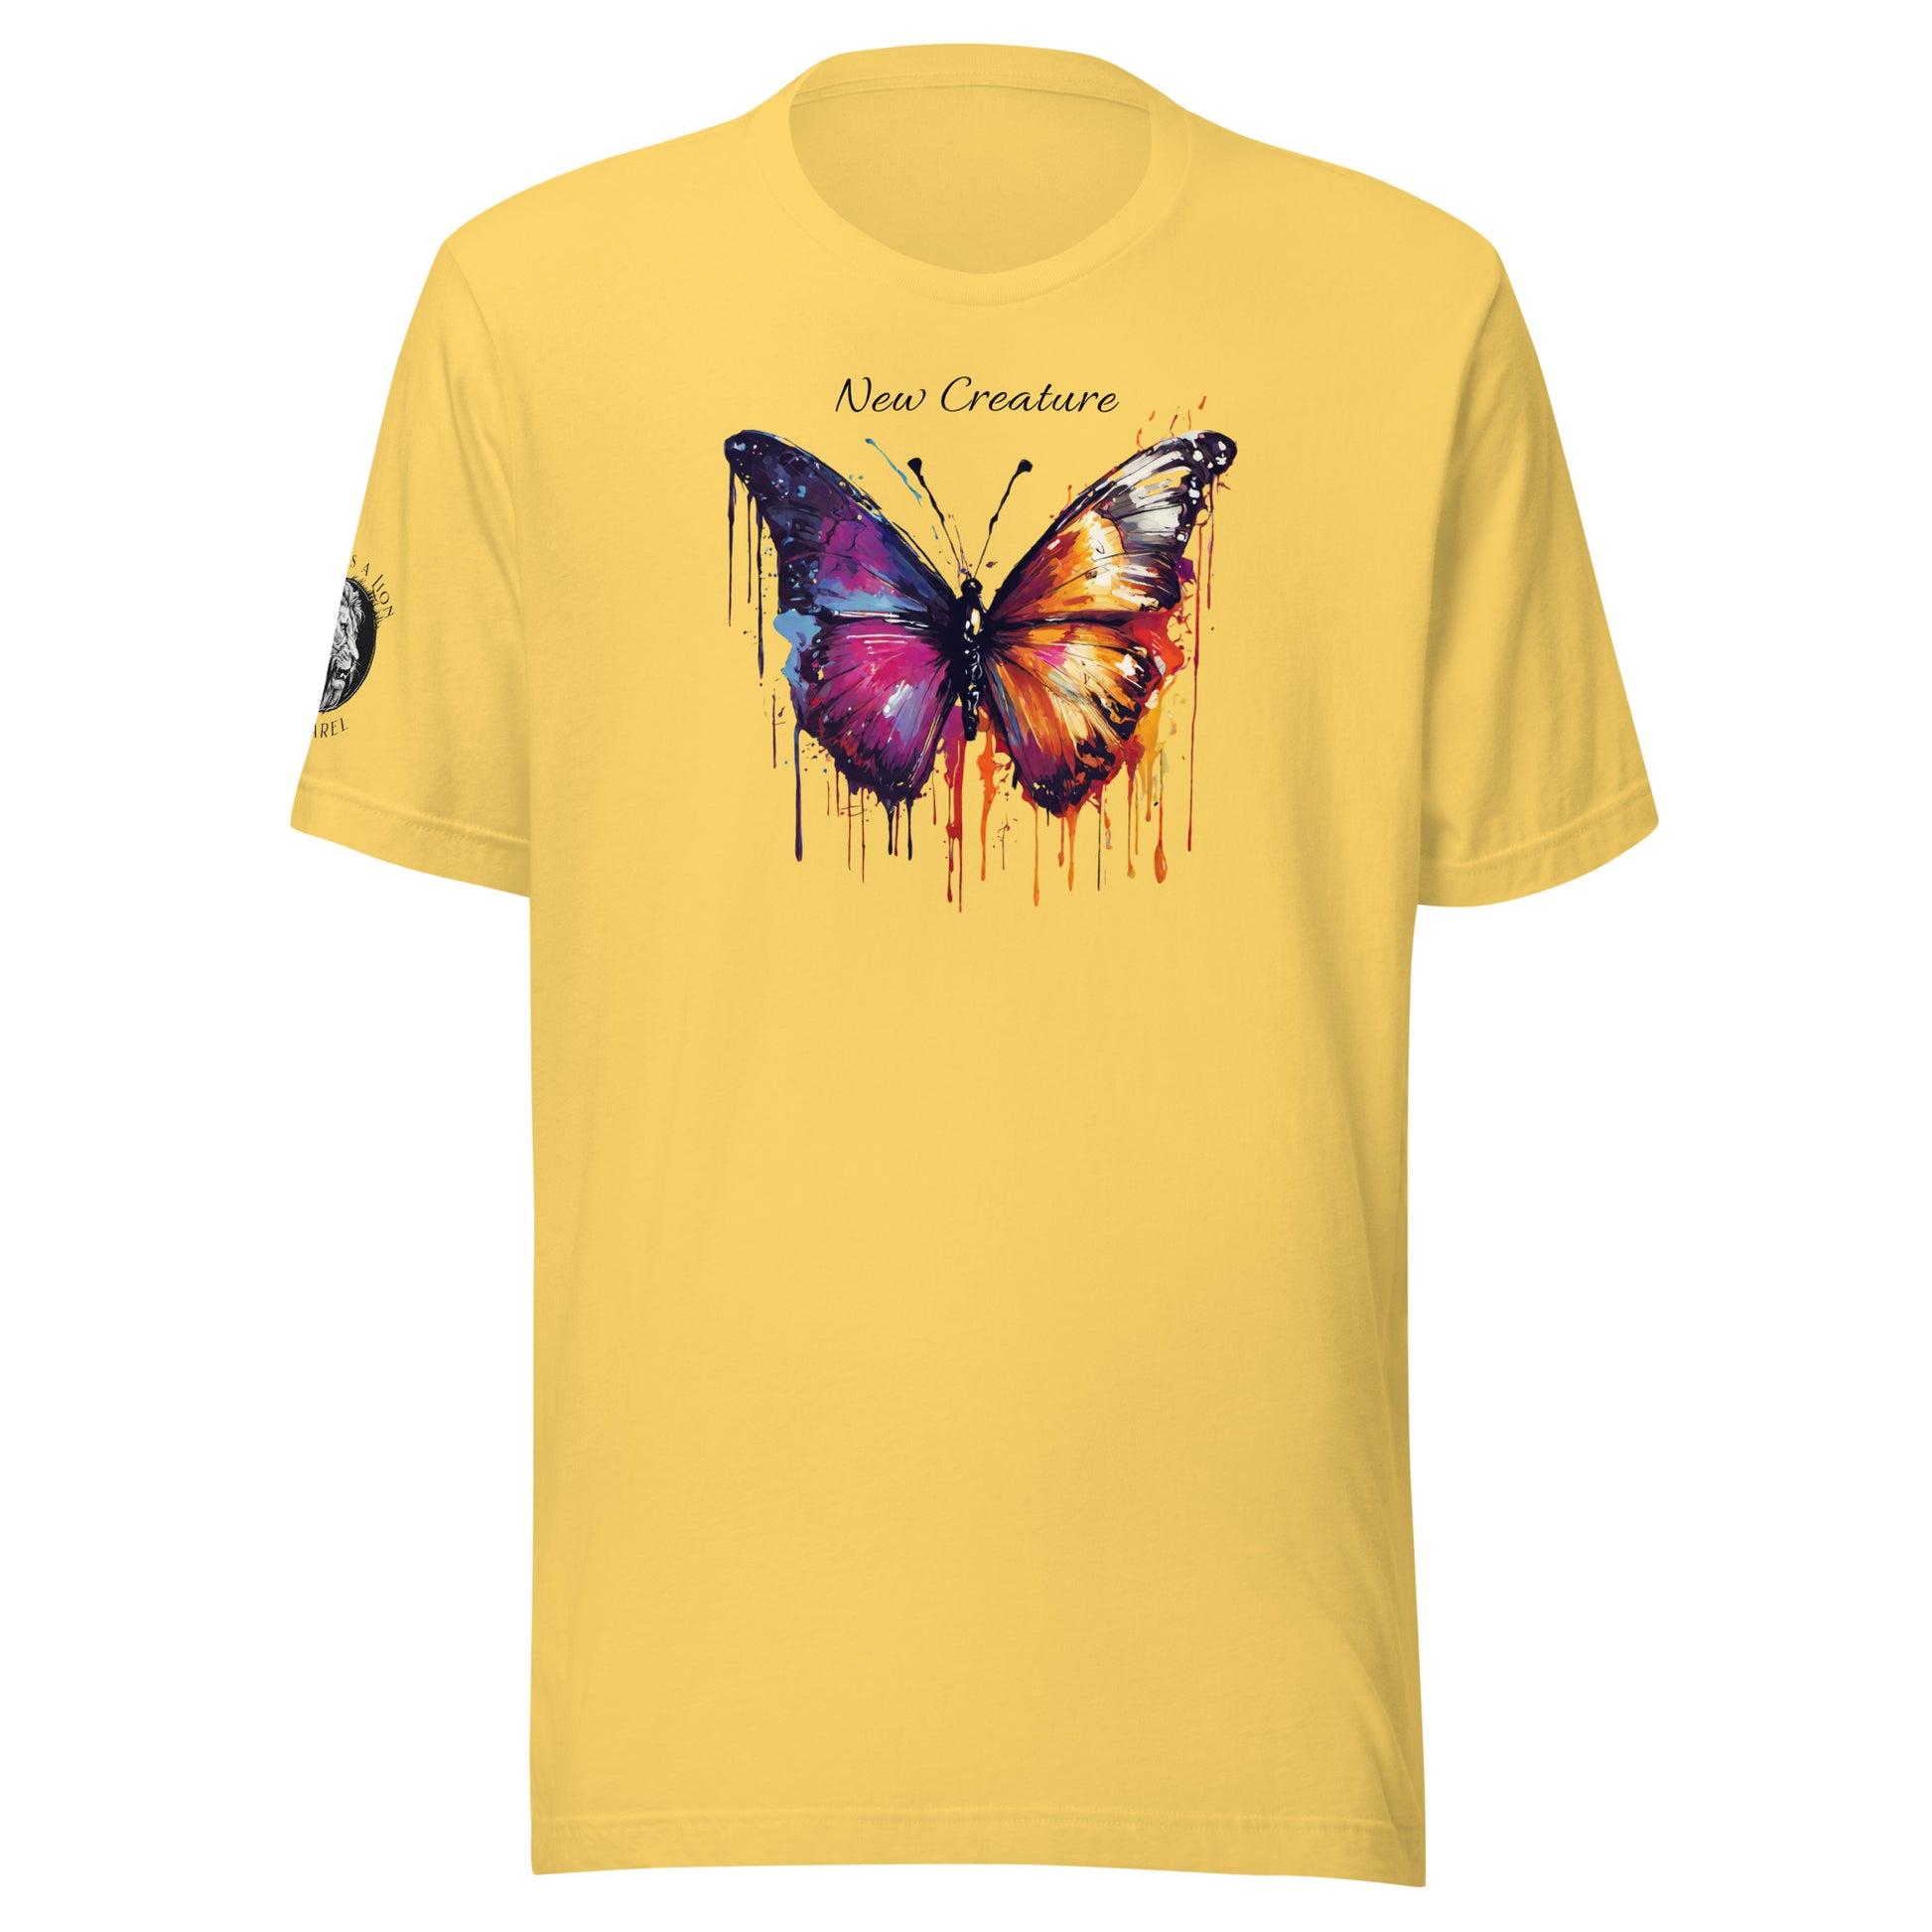 New Creature Christian Women's Beautiful Graphic Classic T-Shirt Yellow